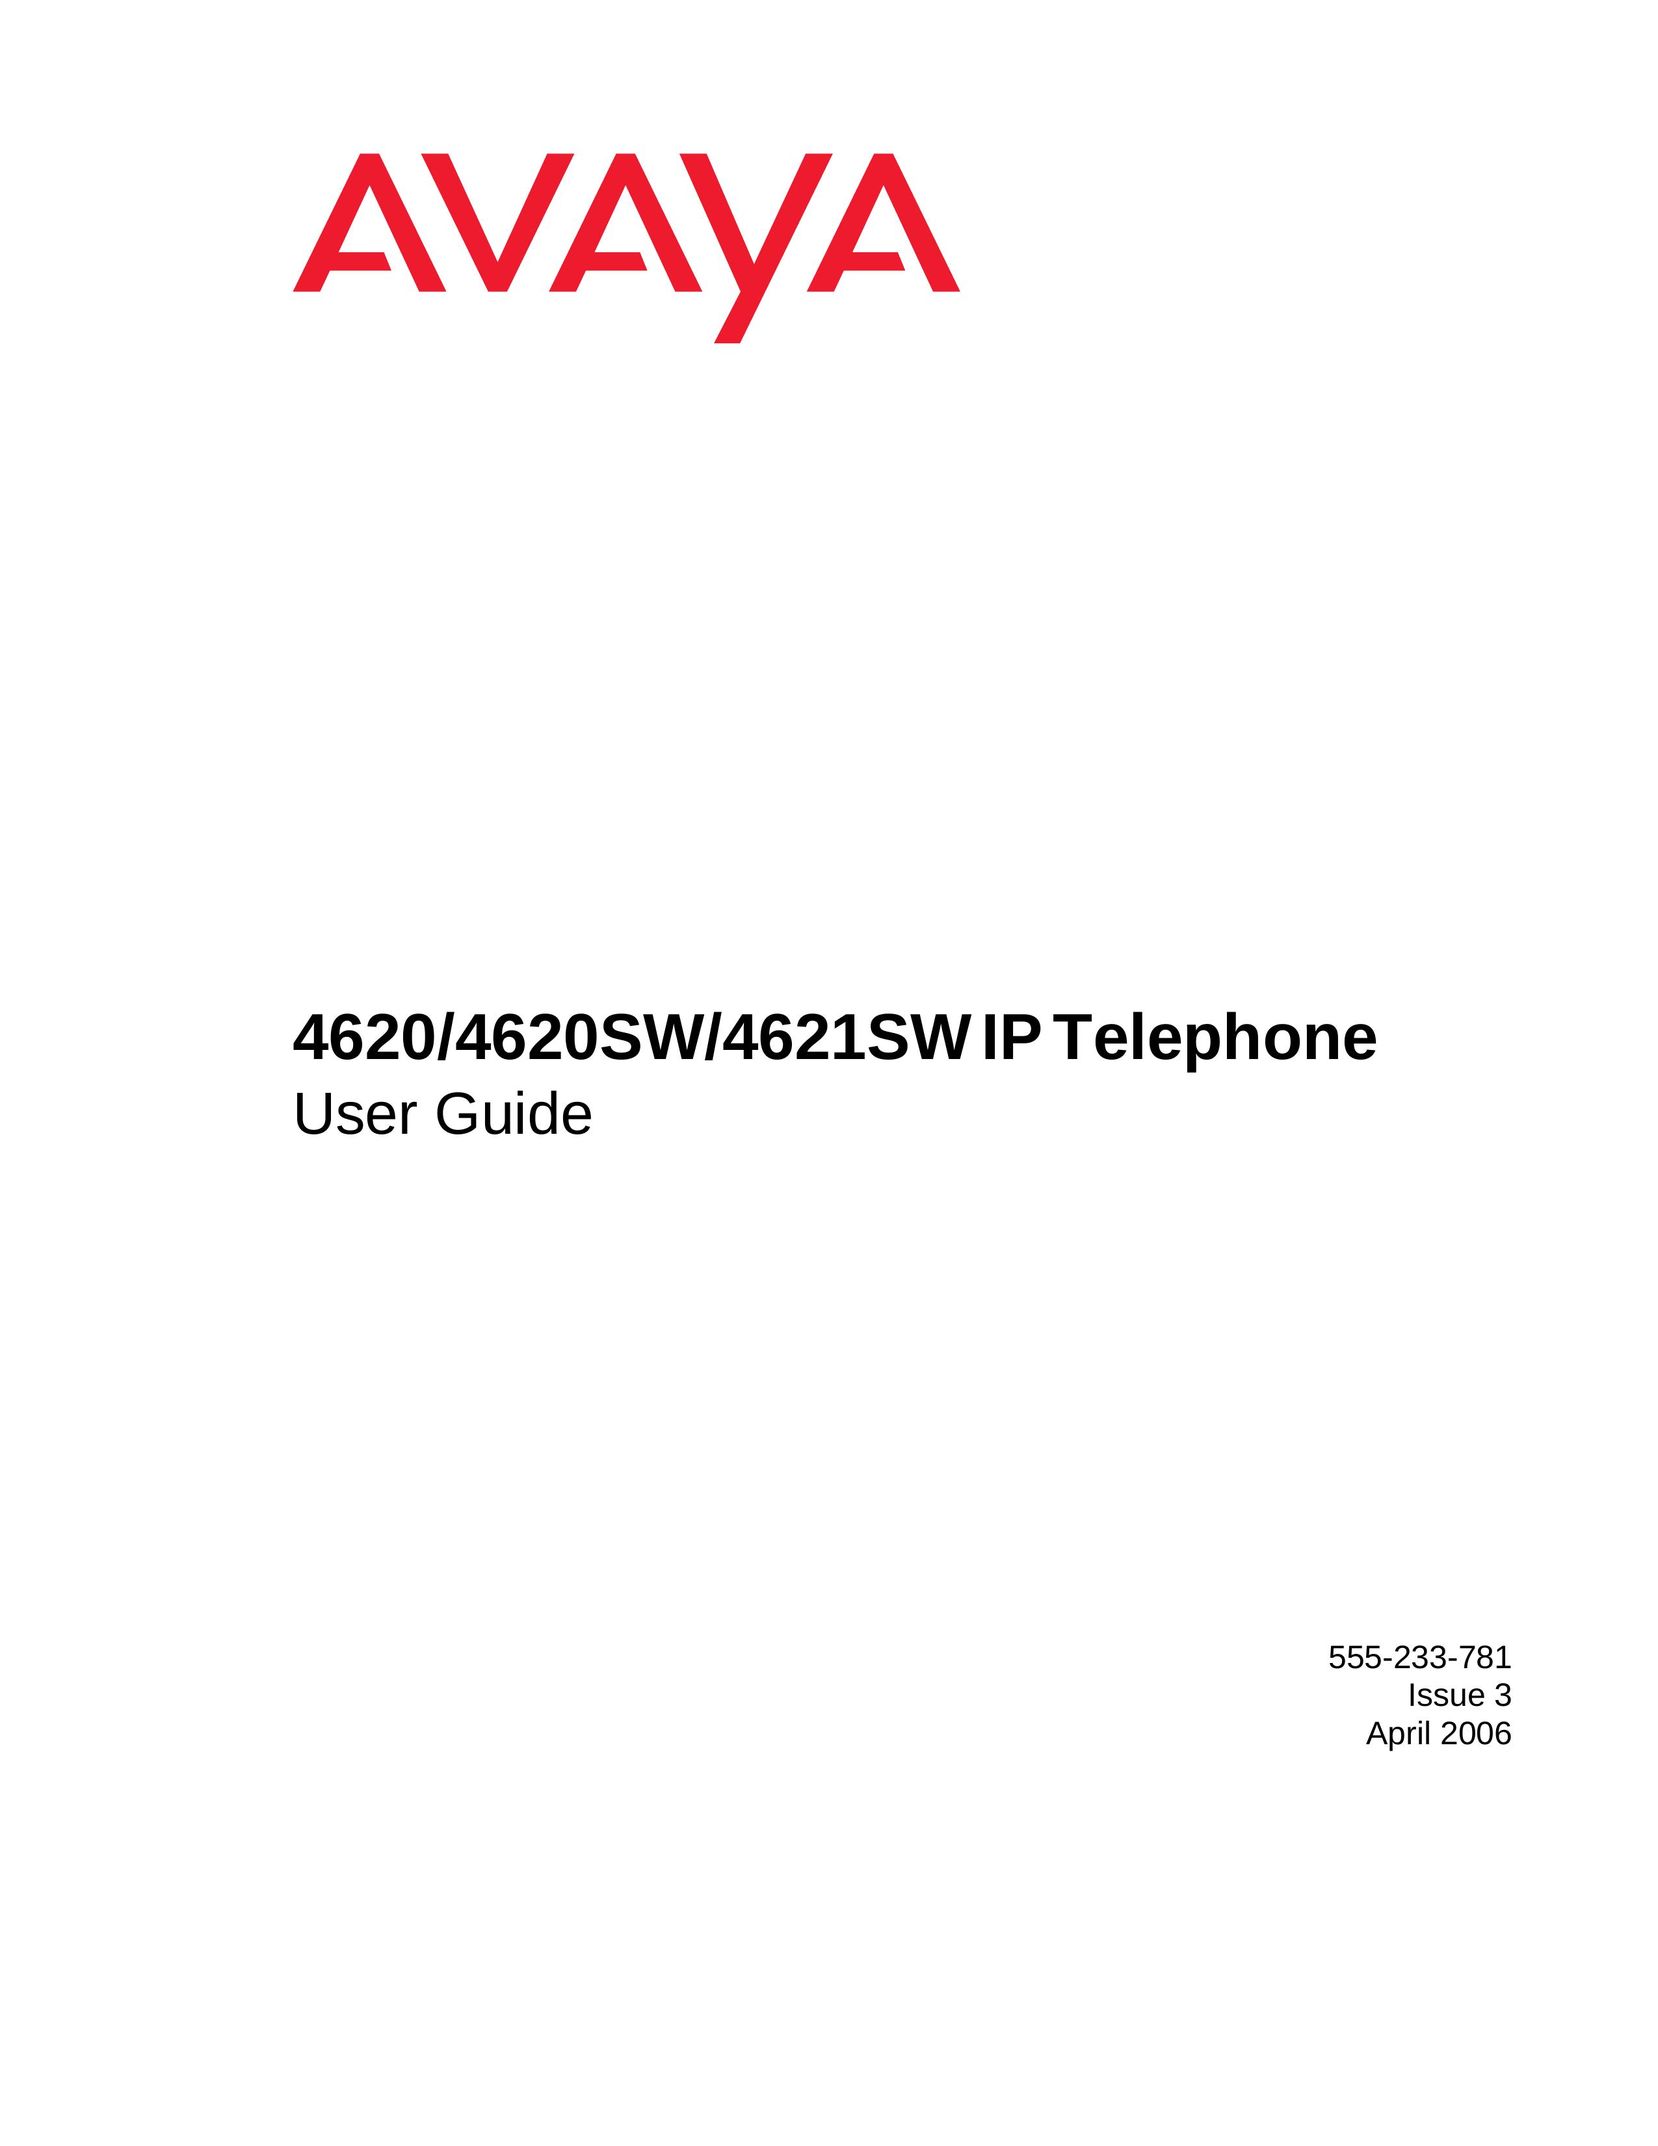 Avaya 4621SW Telephone User Manual